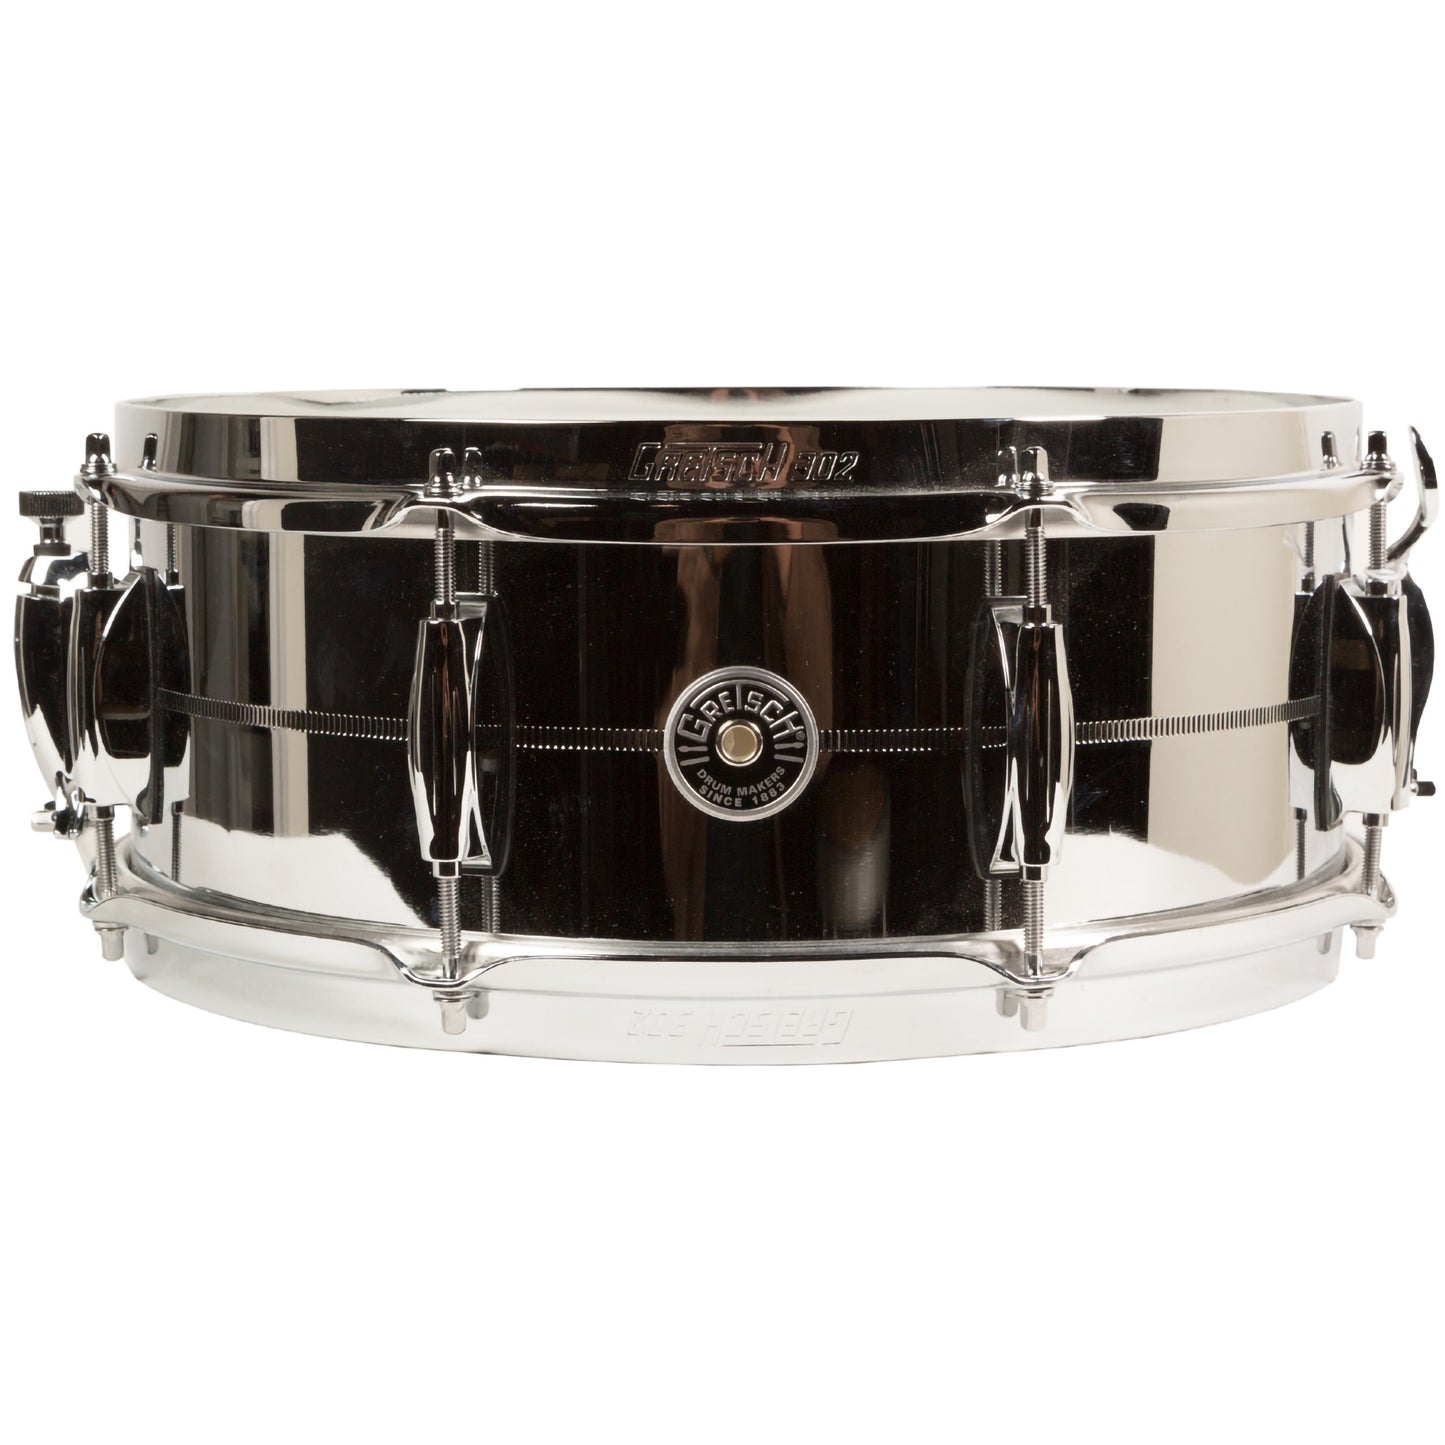 Gretsch Drums GB4165S 5.5x14 Brooklyn Steel Snare Drum